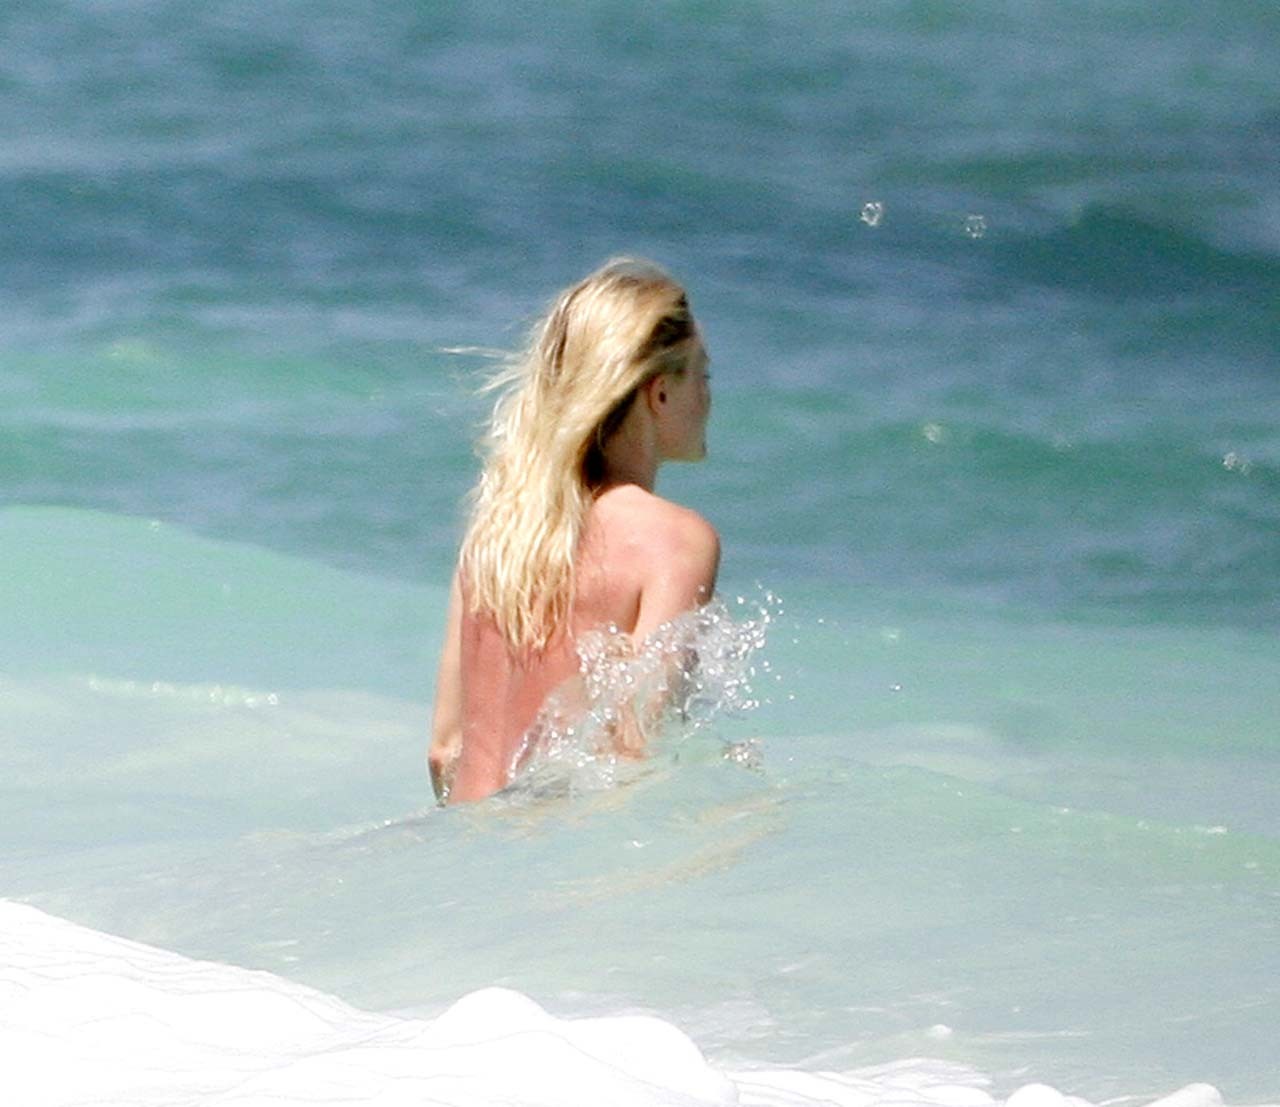 Kate Bosworth enjoying on beach in topless and exposing her sexy bikini body #75308828